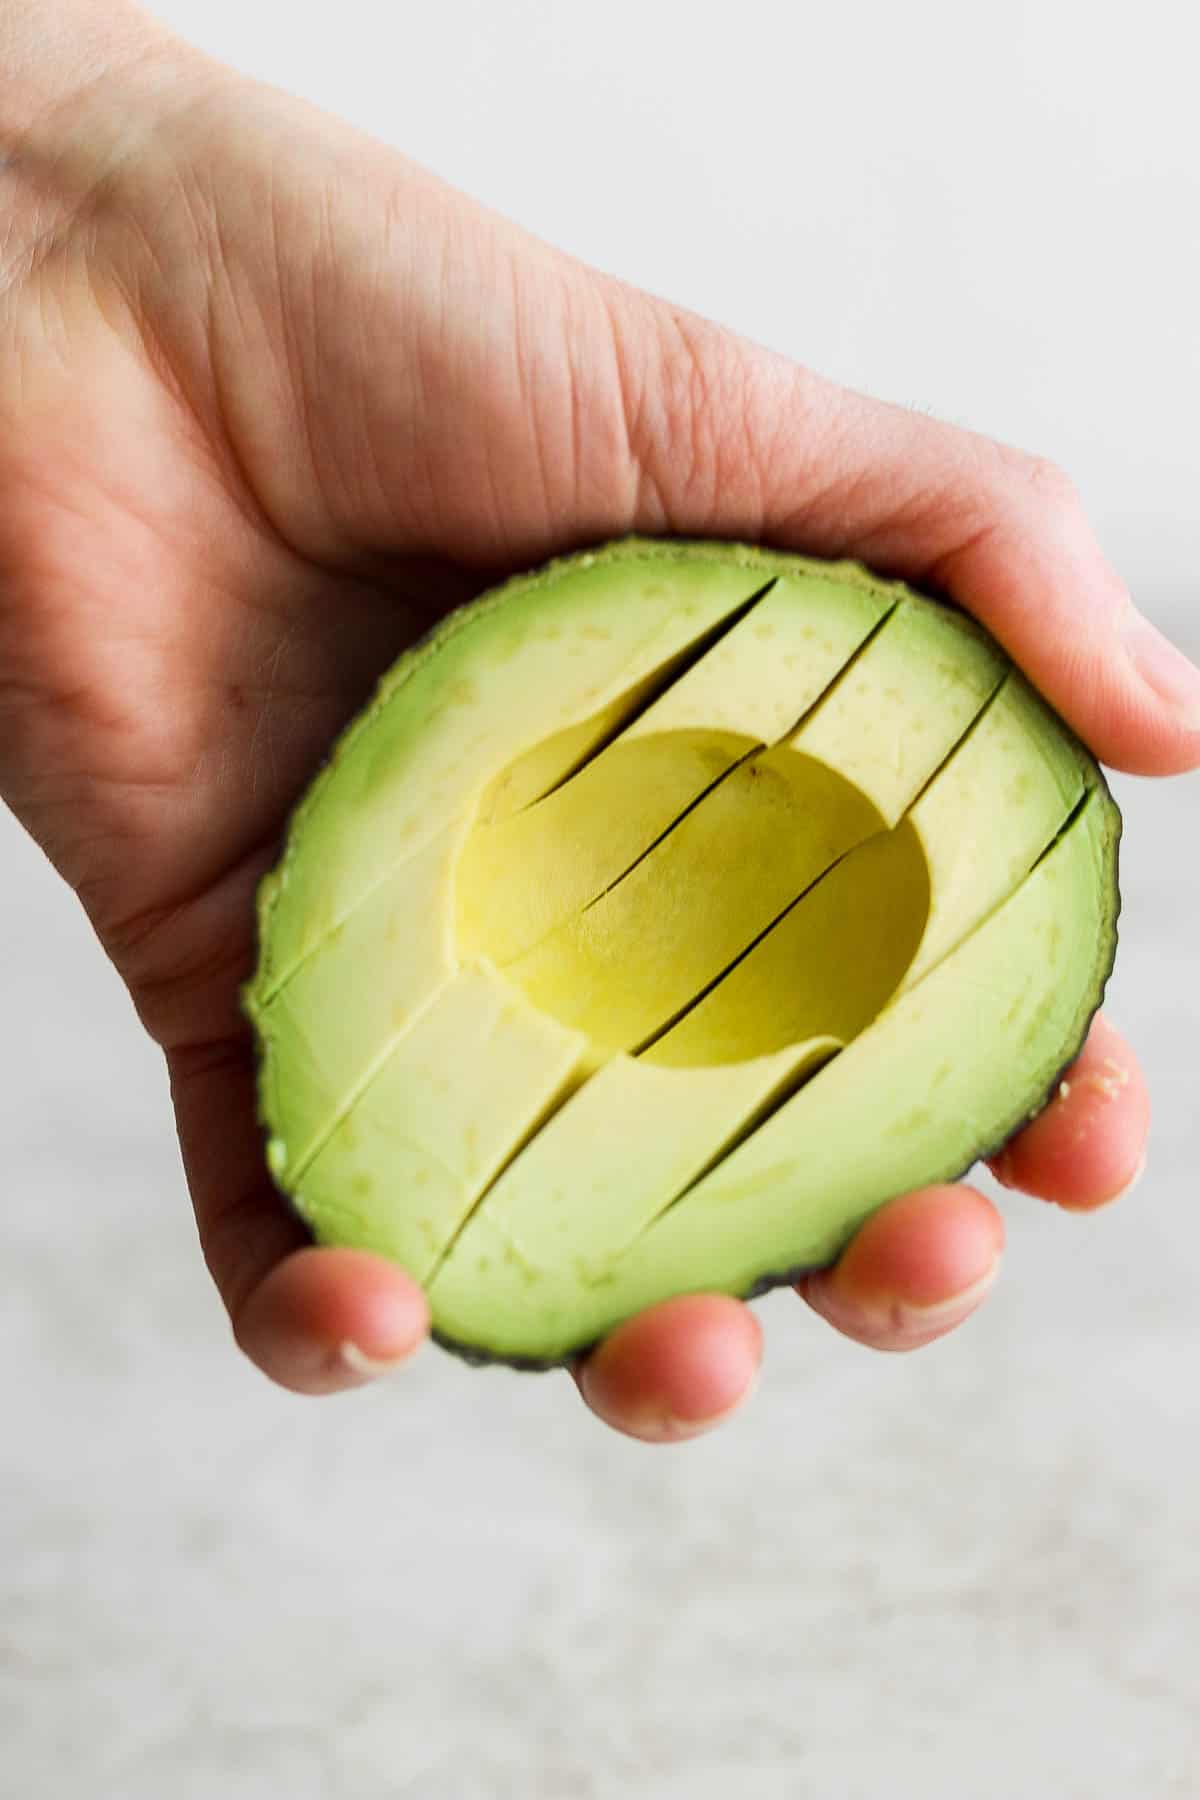 How to easily cut an avocado.